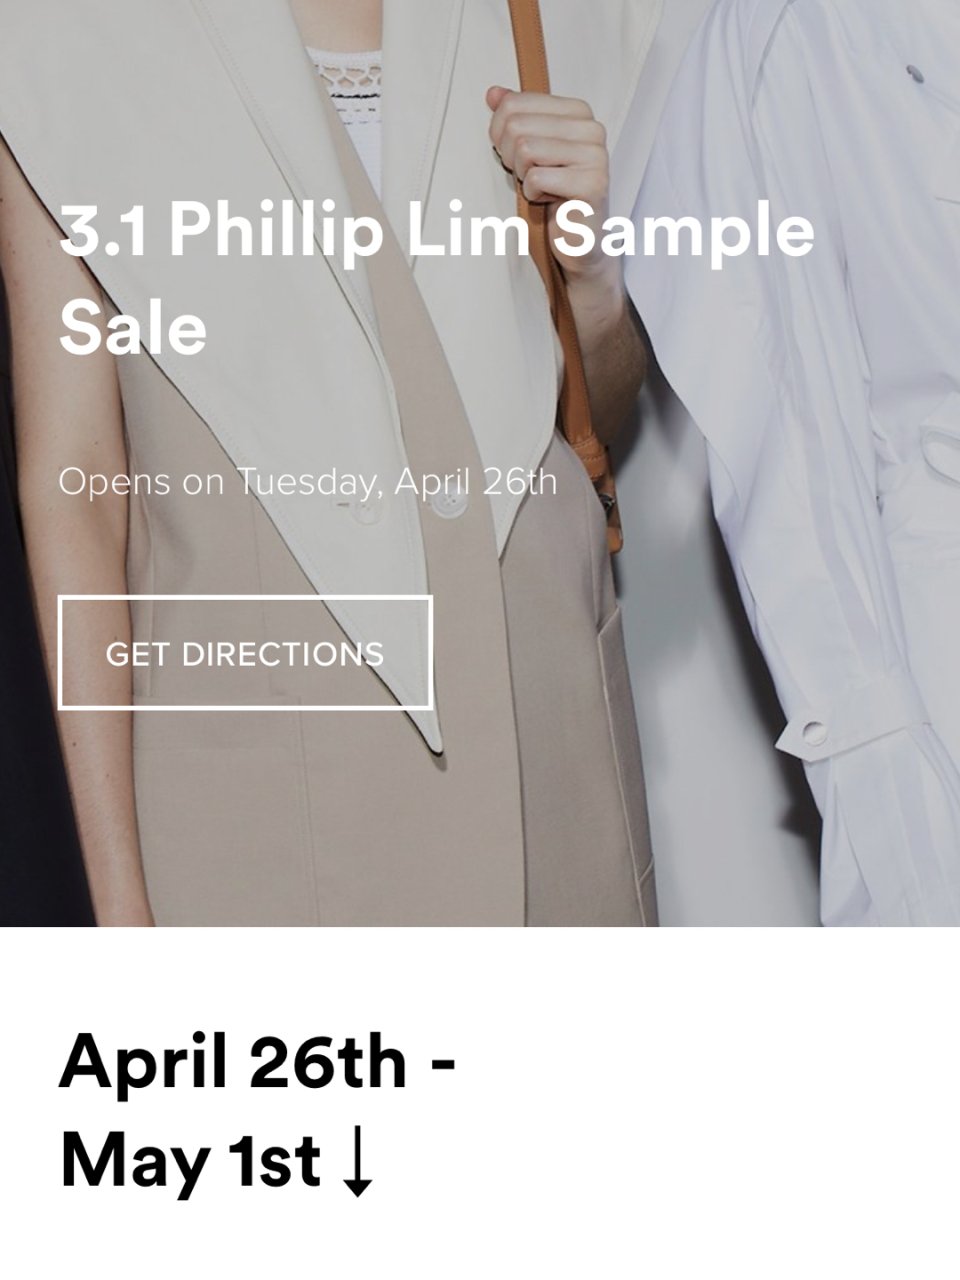 菲利林3.1 sample sale于明...